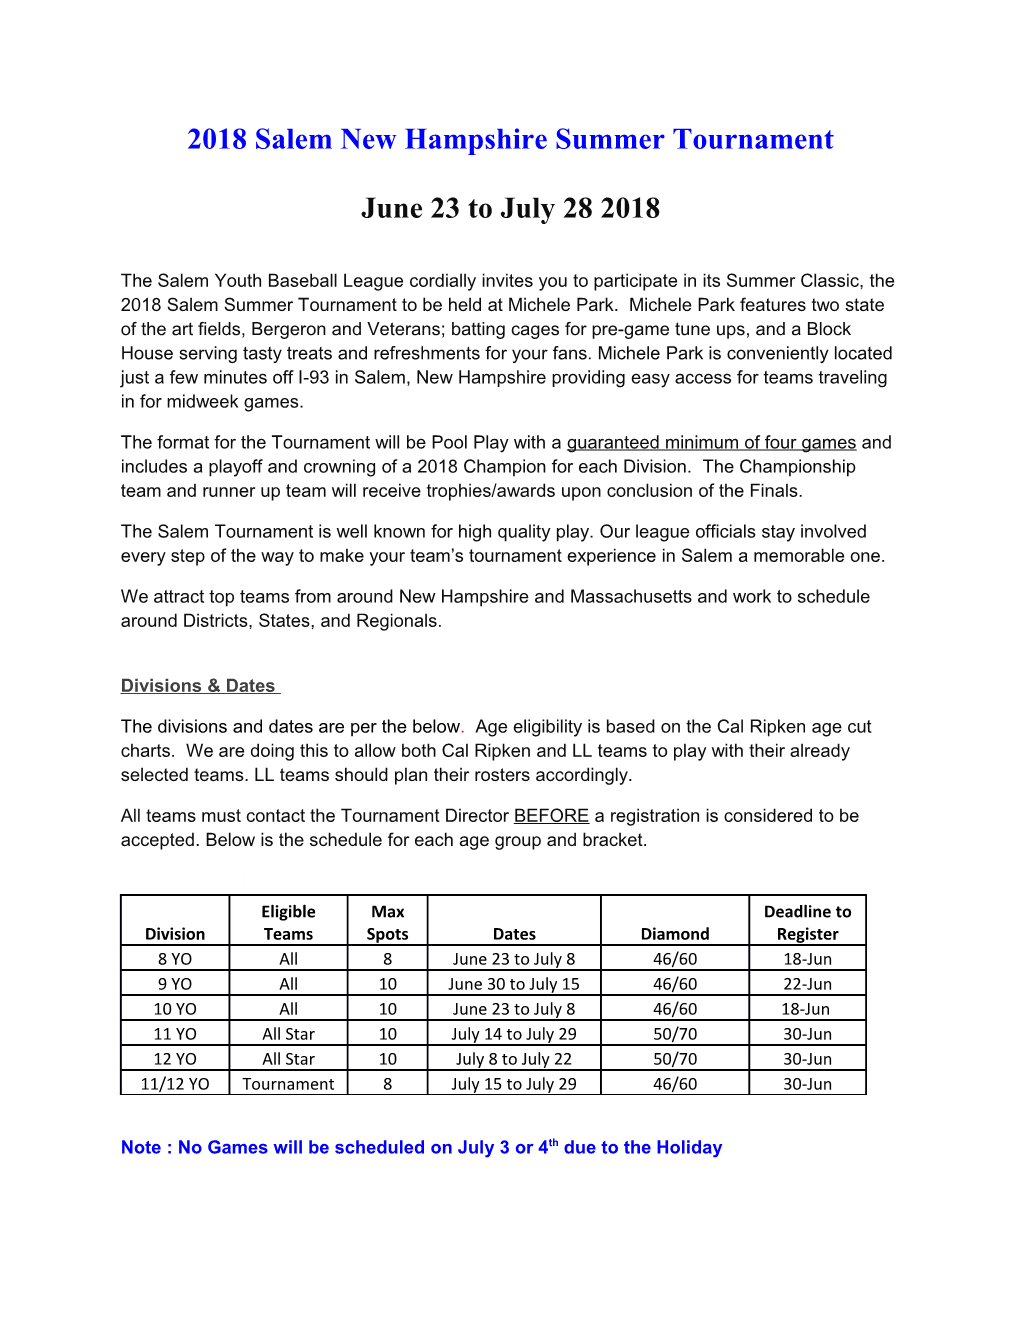 2018Salem New Hampshire Summer Tournament